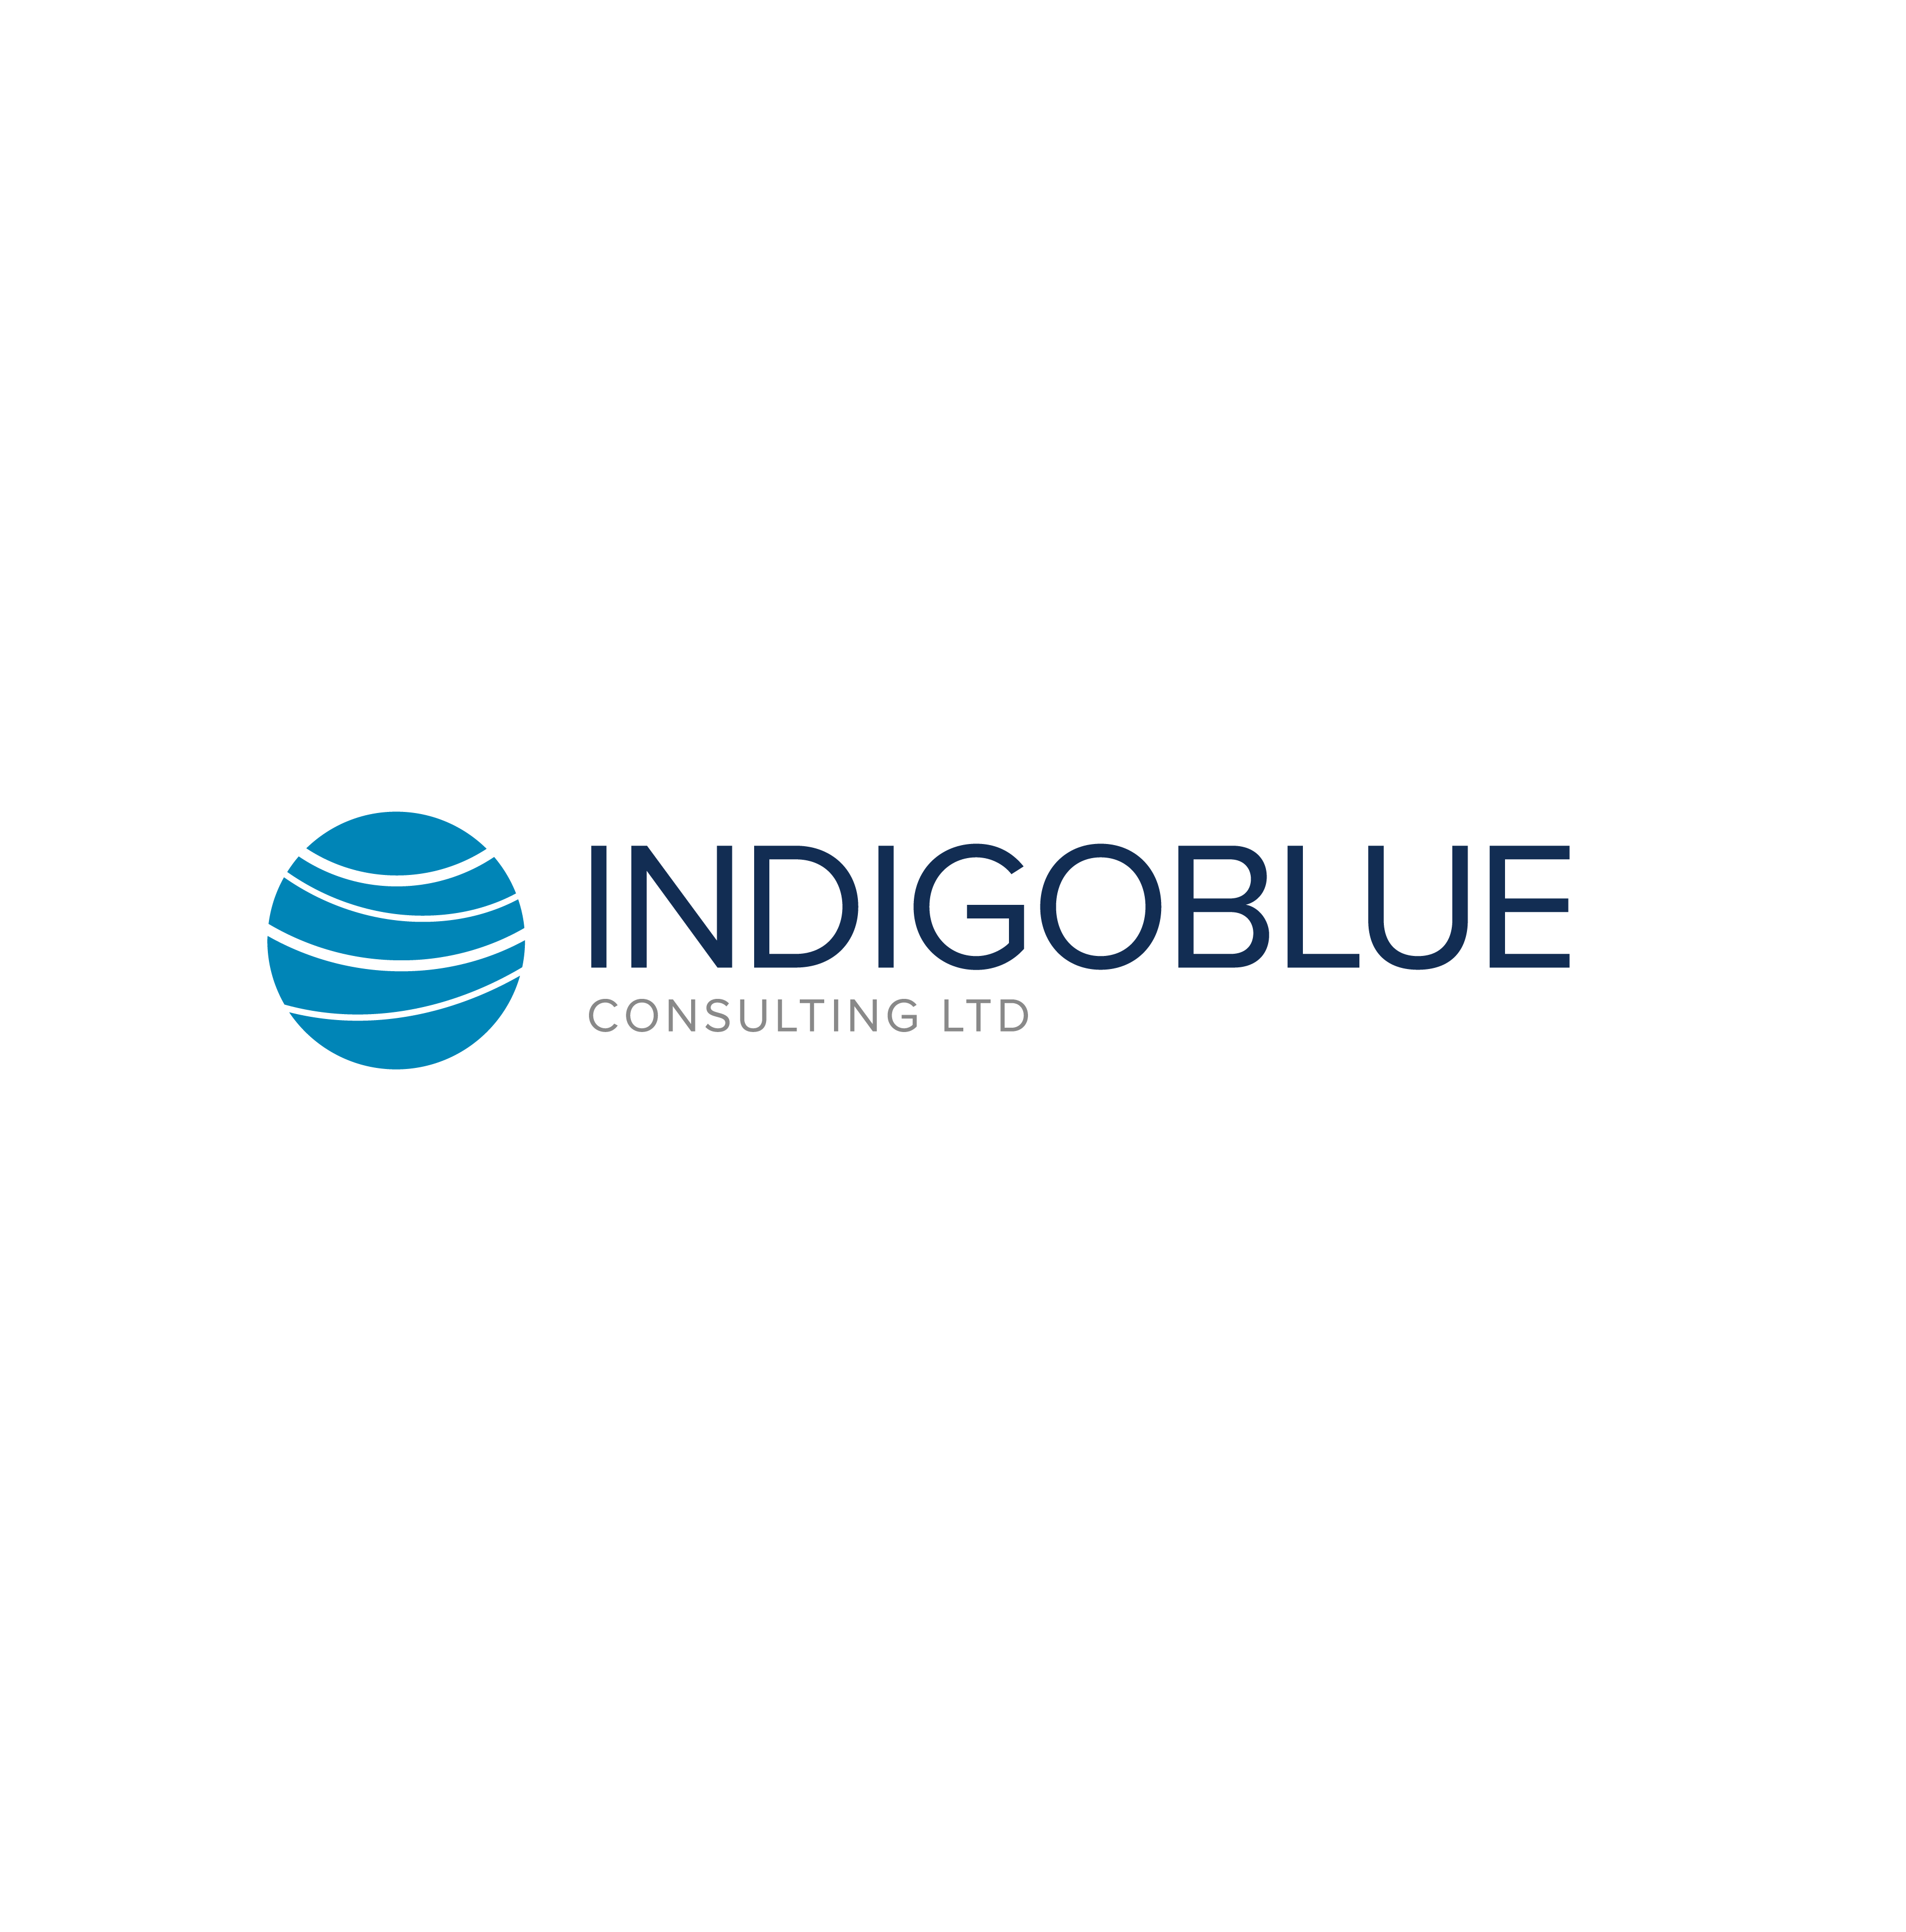 IndigoBlue